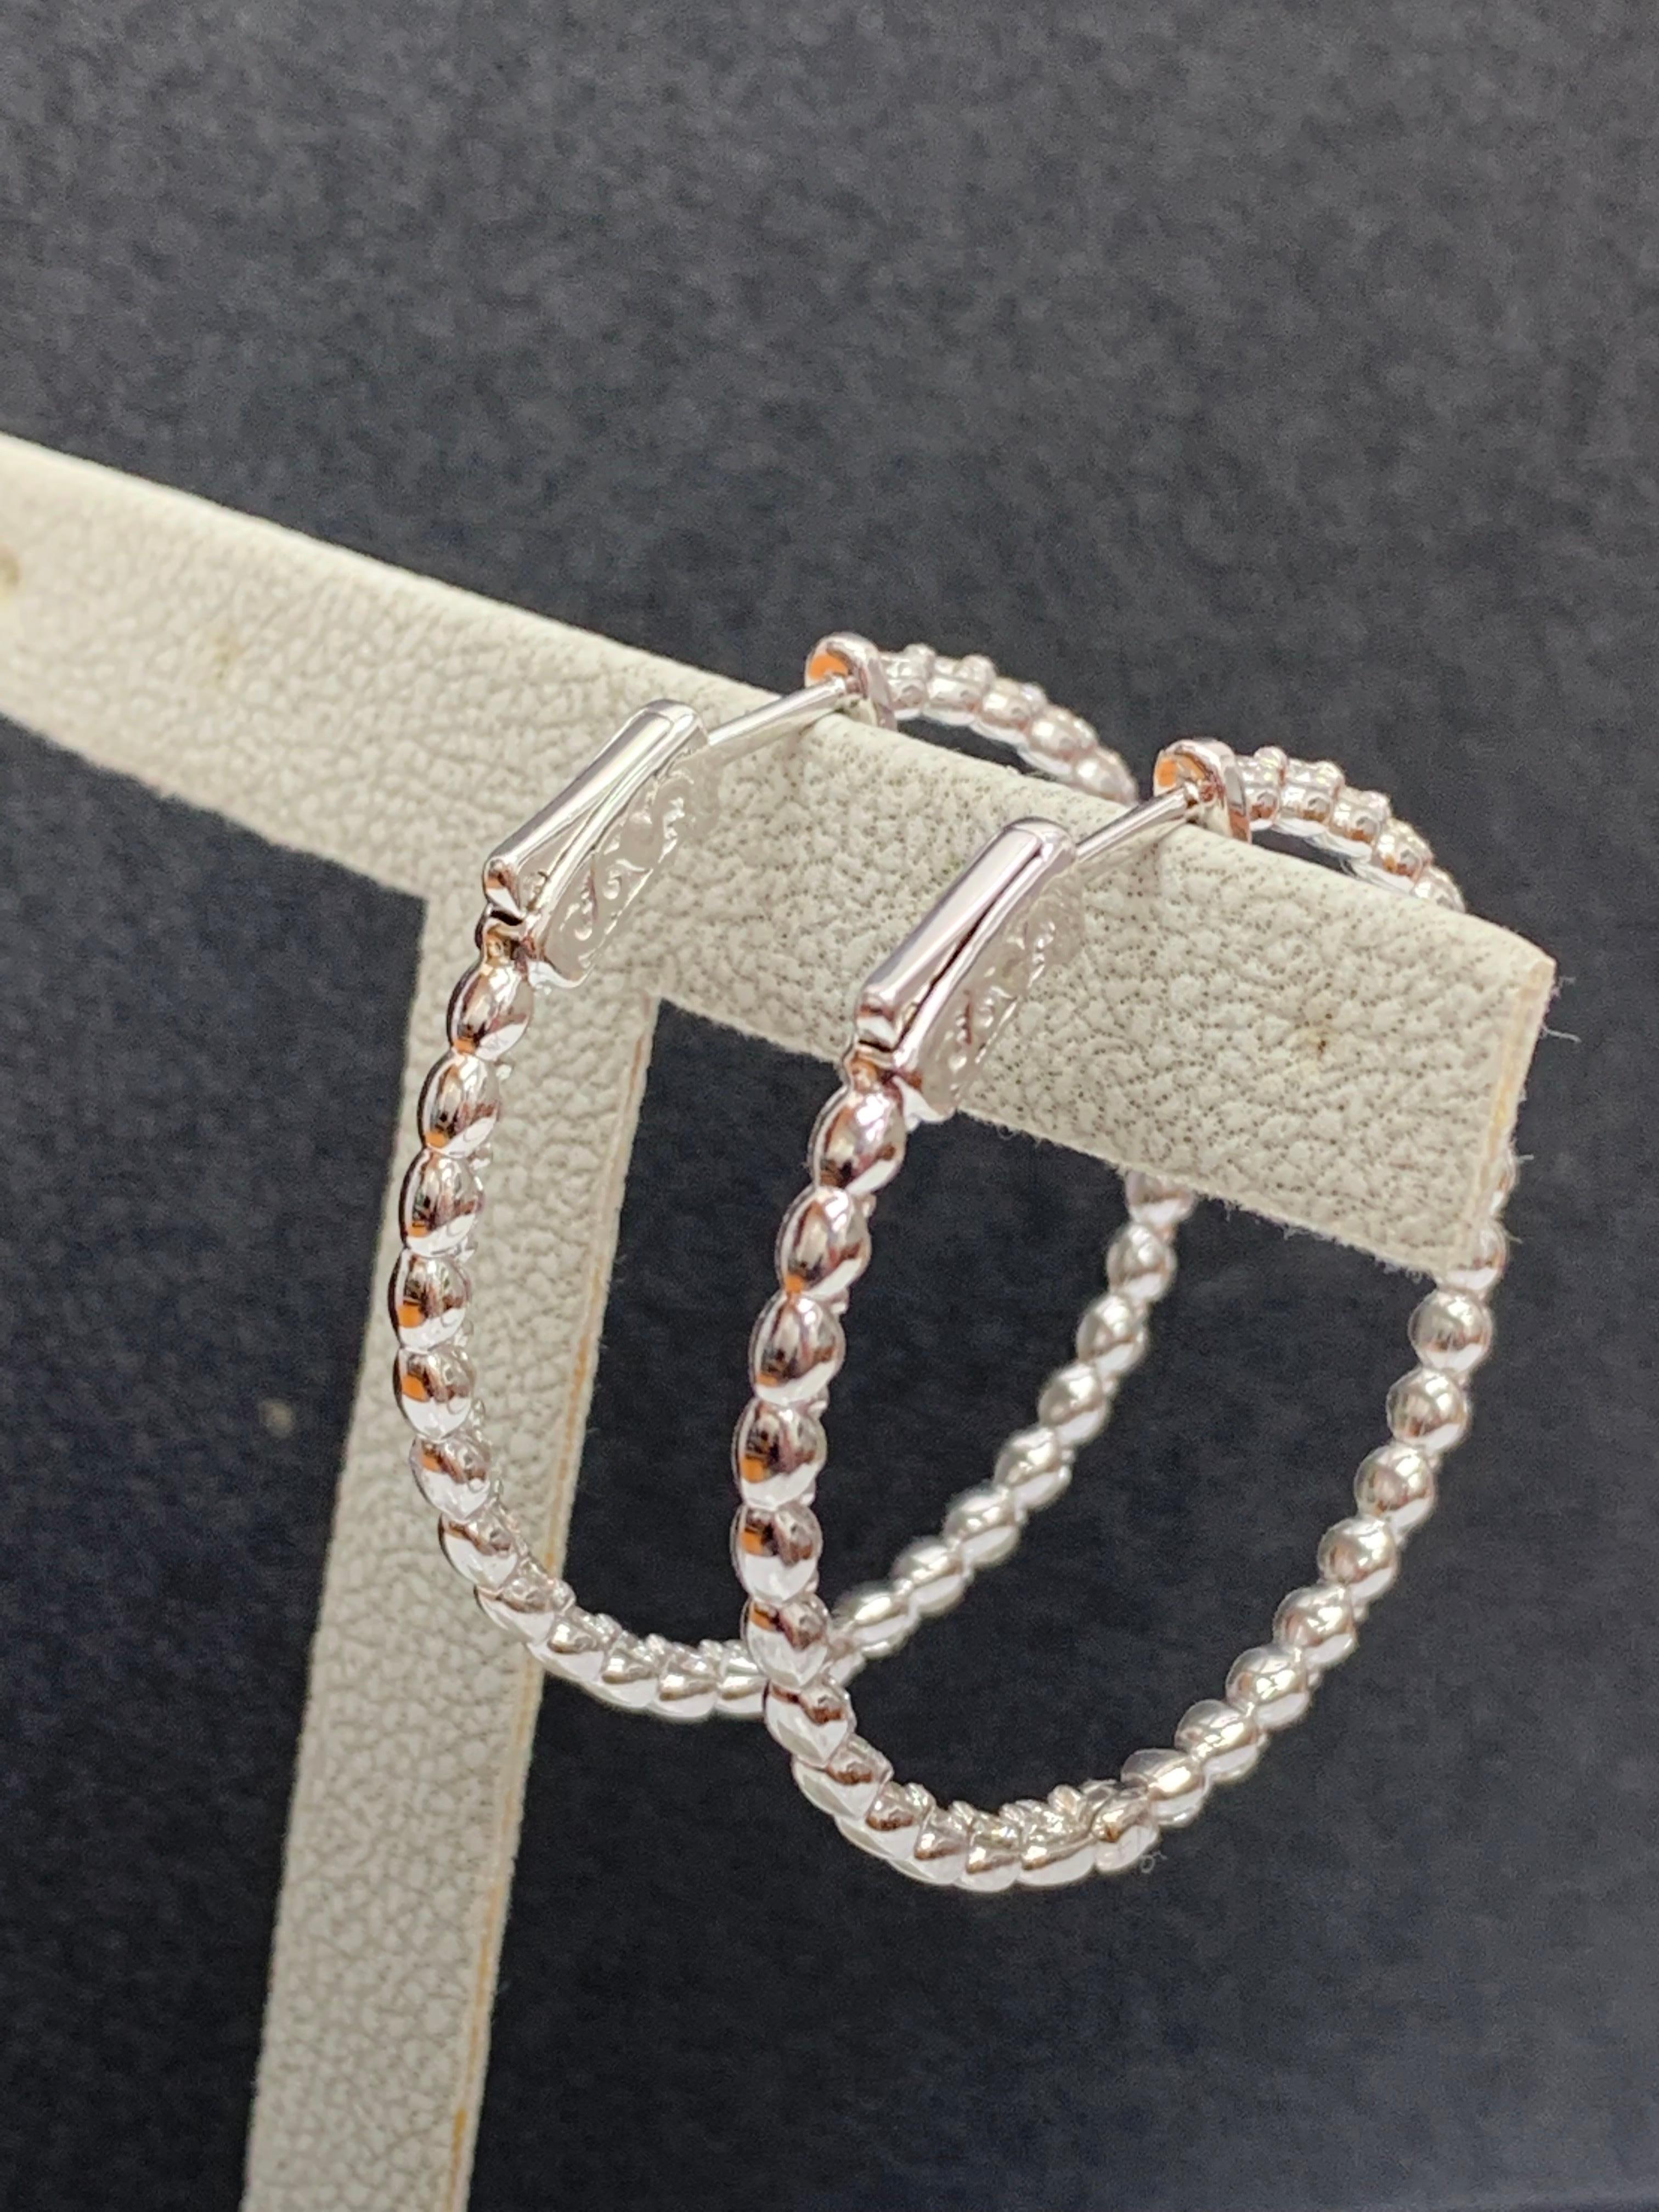 2.01 Carat Brilliant Cut Round Diamond Hoop Earrings in 14K White Gold For Sale 1